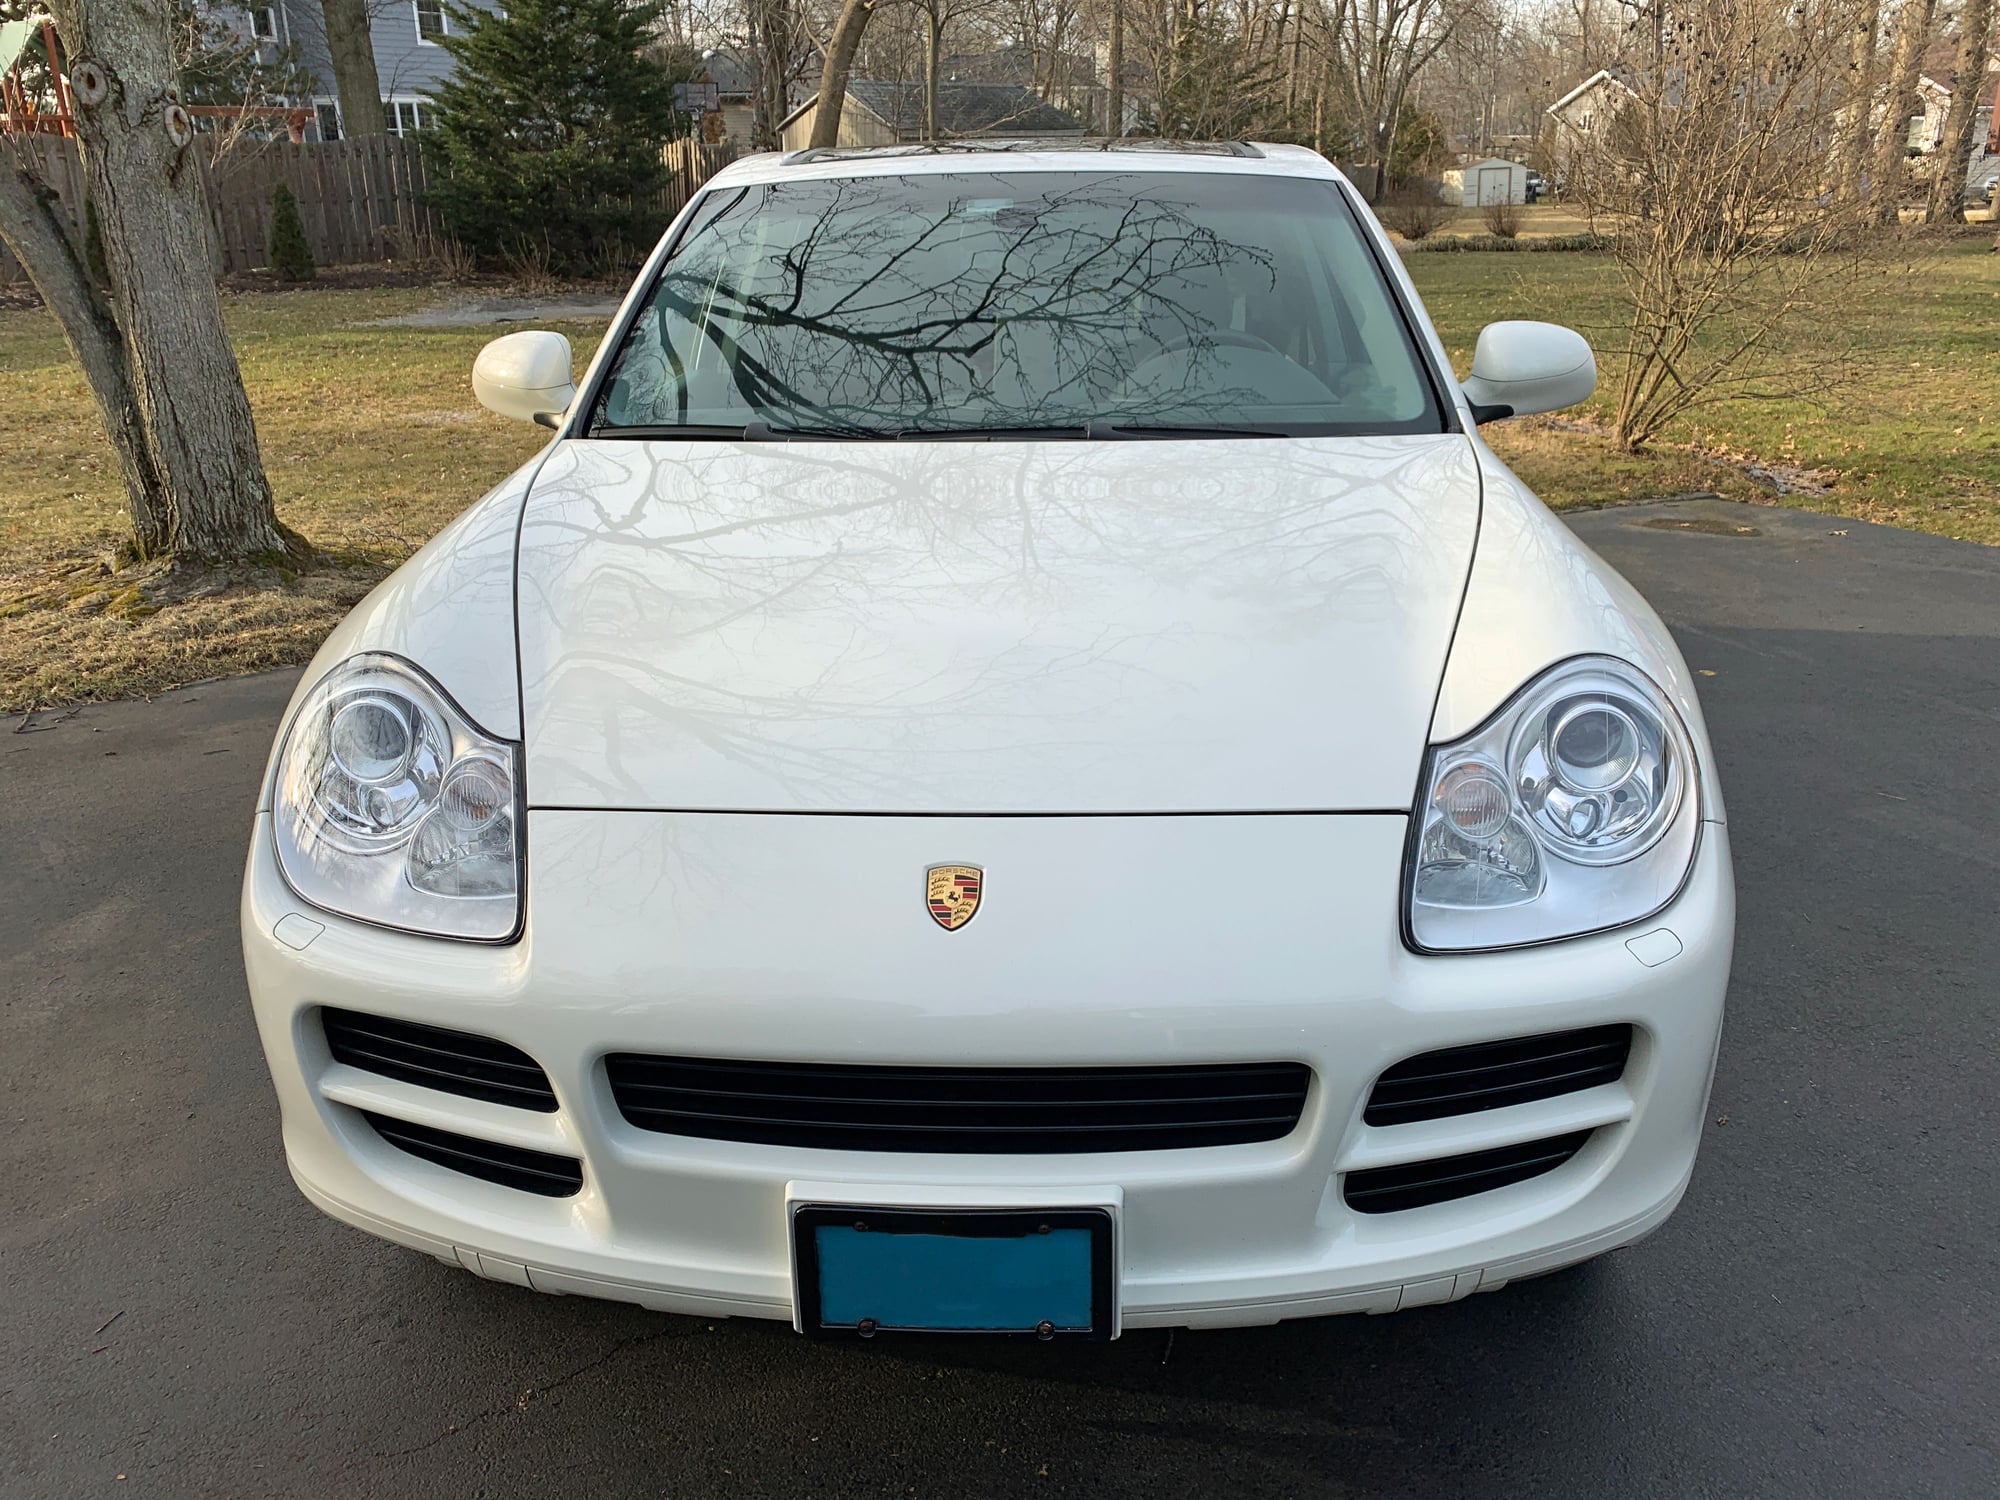 2006 Porsche Cayenne - 2006 Porsche Cayenne **6 SPEED MANUAL - RARE** - Used - VIN WP1AA29P96LA21934 - 6 cyl - 4WD - Manual - SUV - White - Summit, NJ 07901, United States